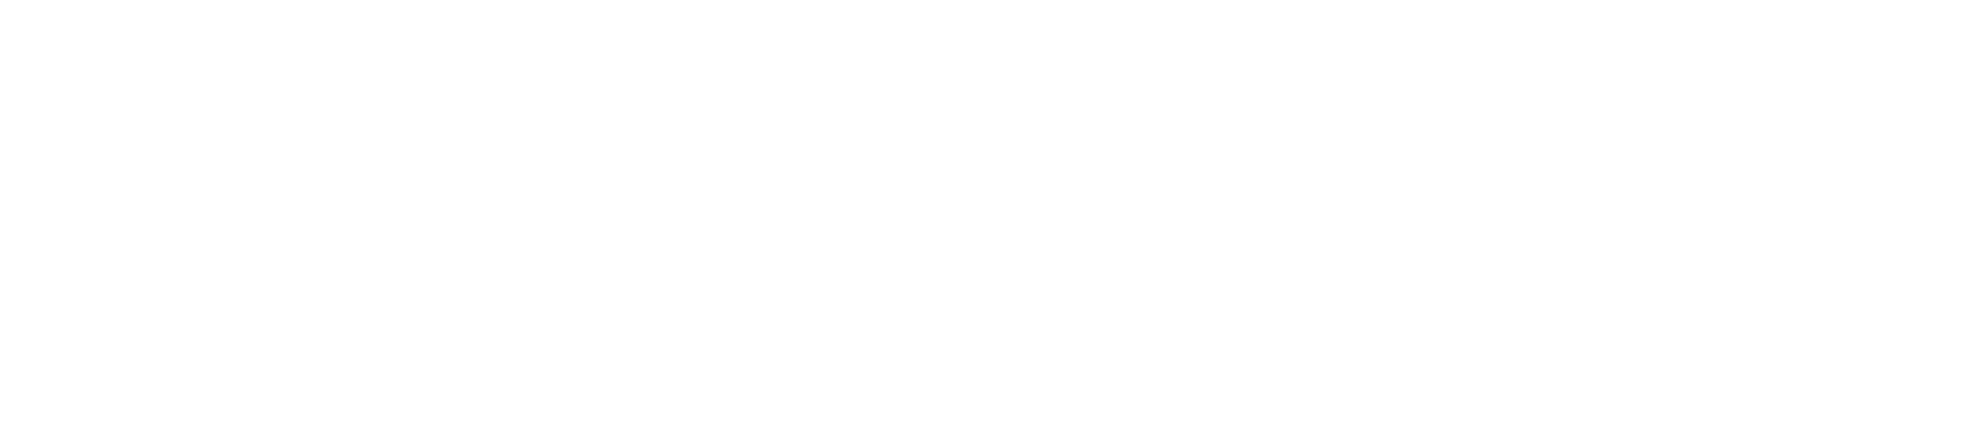 Christian Freedom International Giving Store